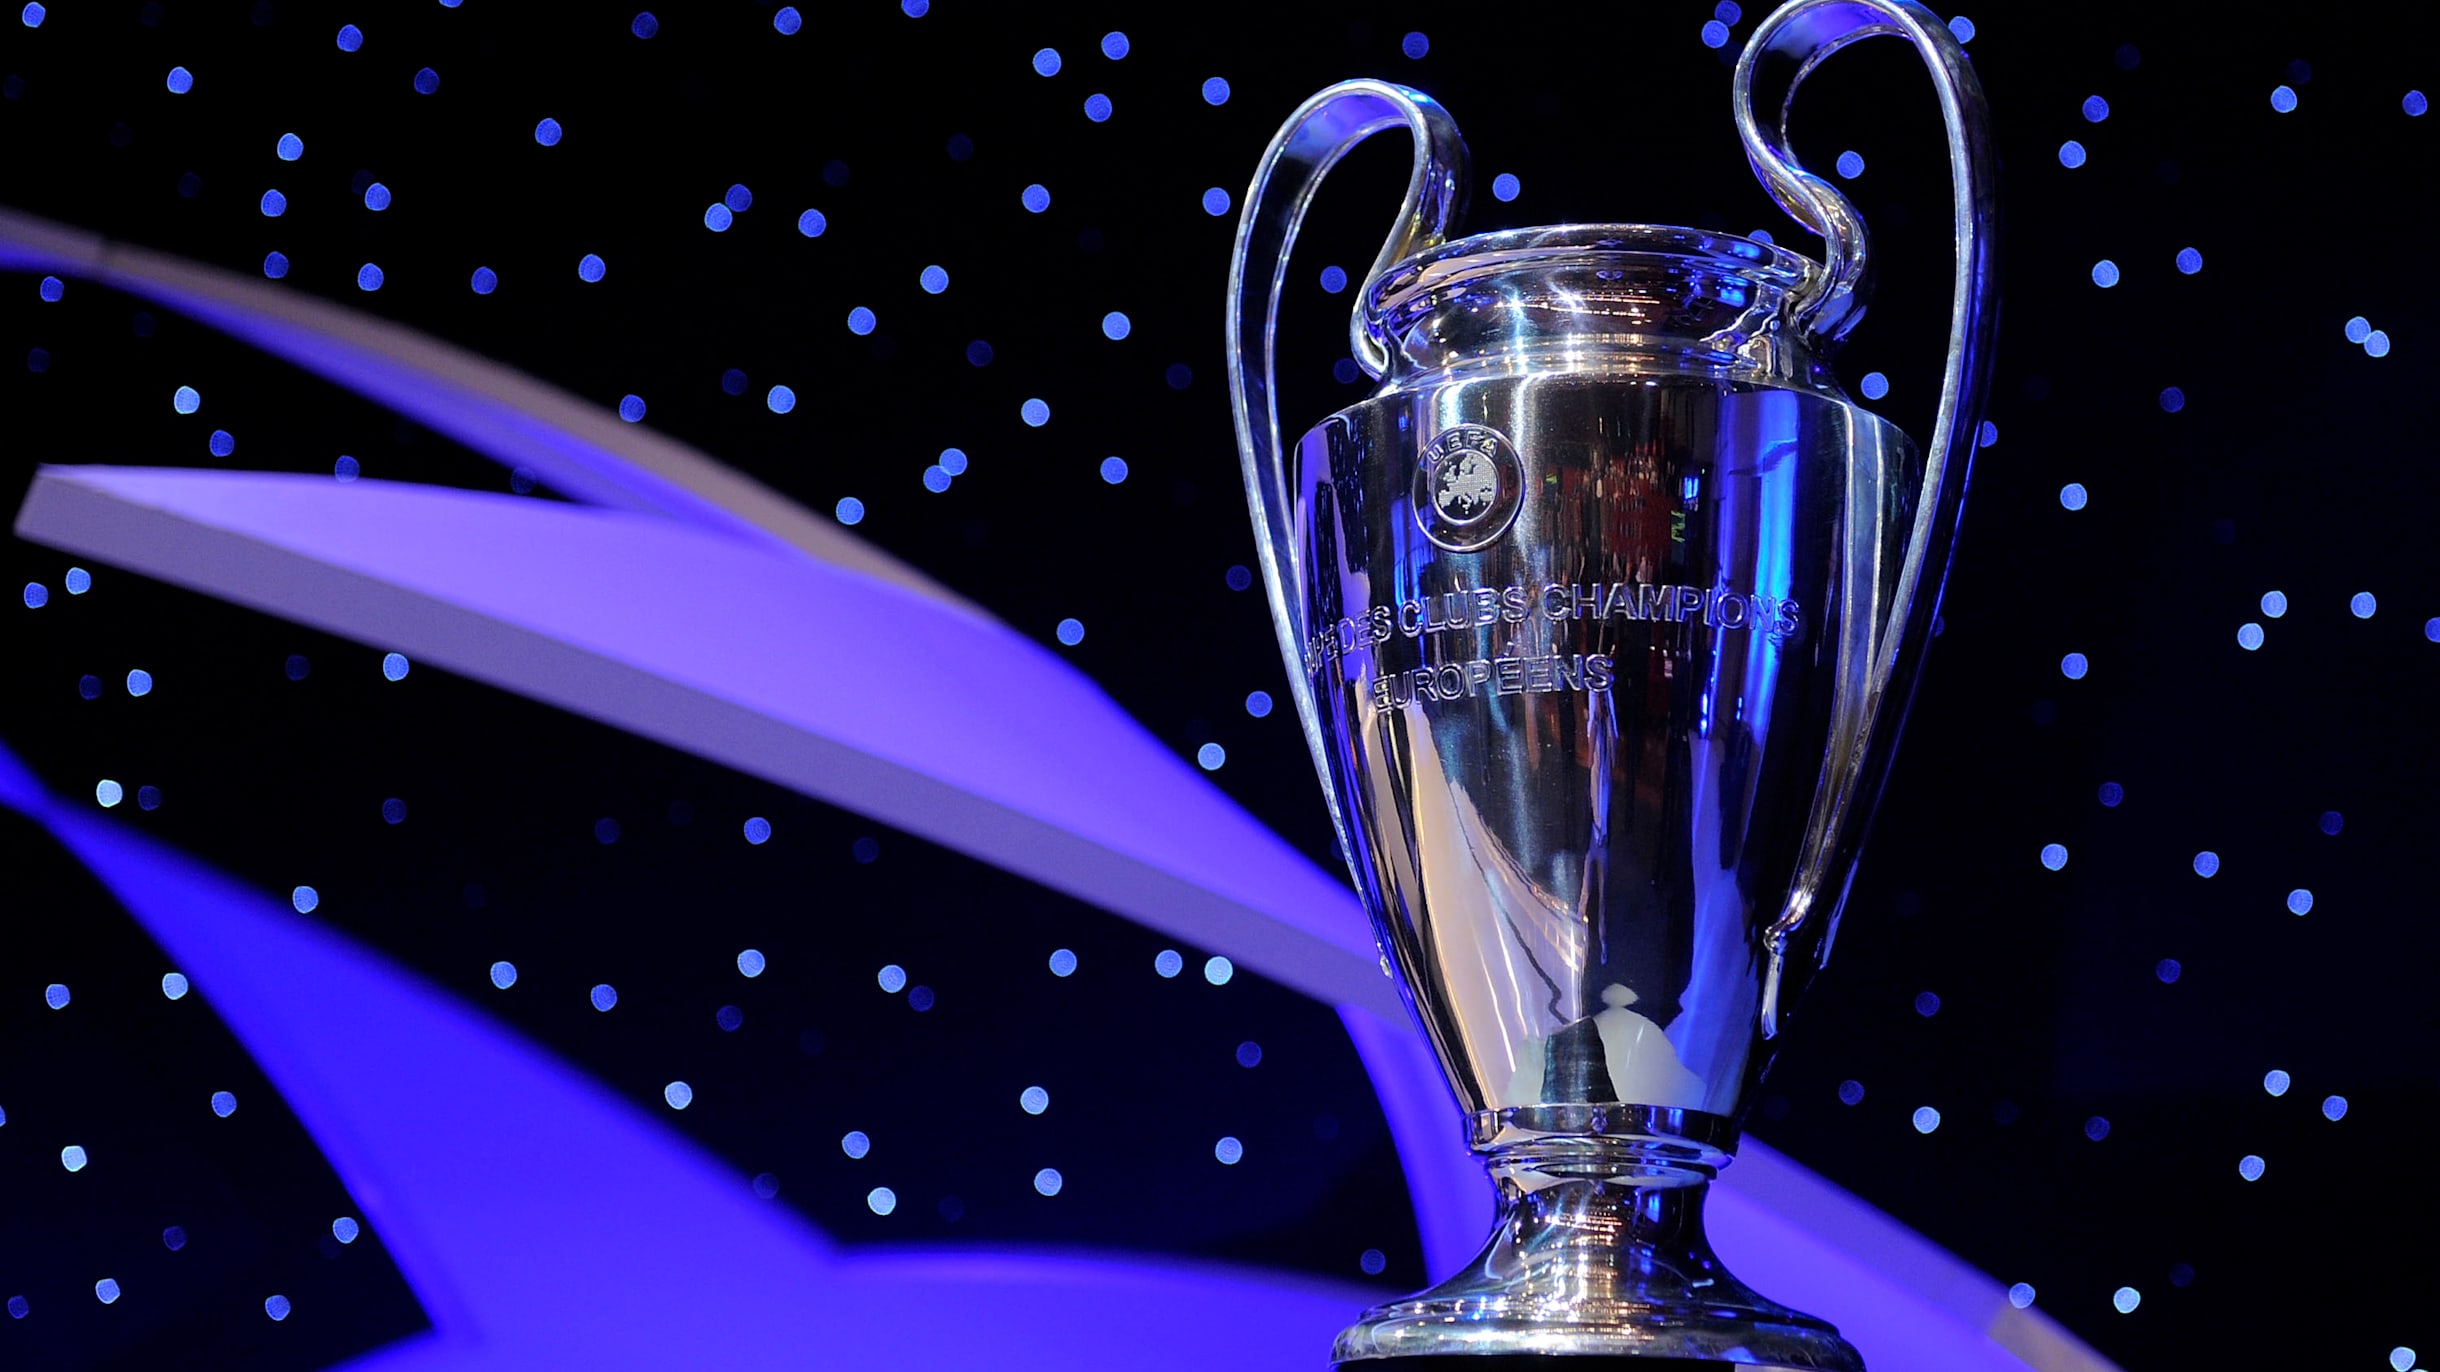 Quarter-finals draw, UEFA Champions League 2022/2023: possible opponents